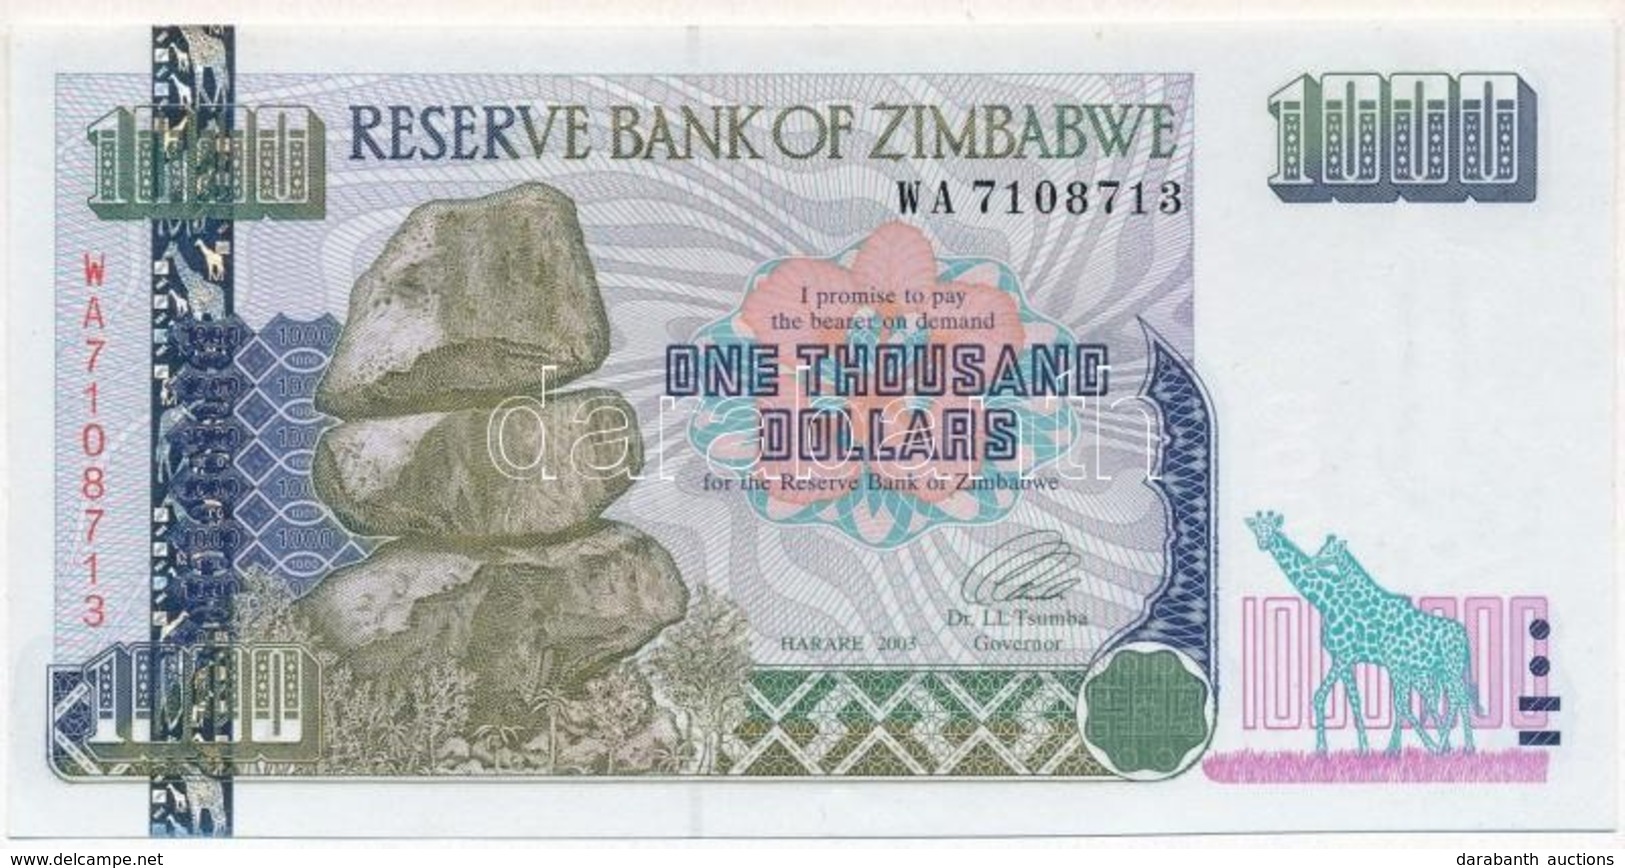 Zimbabwe 2003. 1000$ T:I
Zimbabwe 2003. 1000 Dollars C:UNC - Unclassified